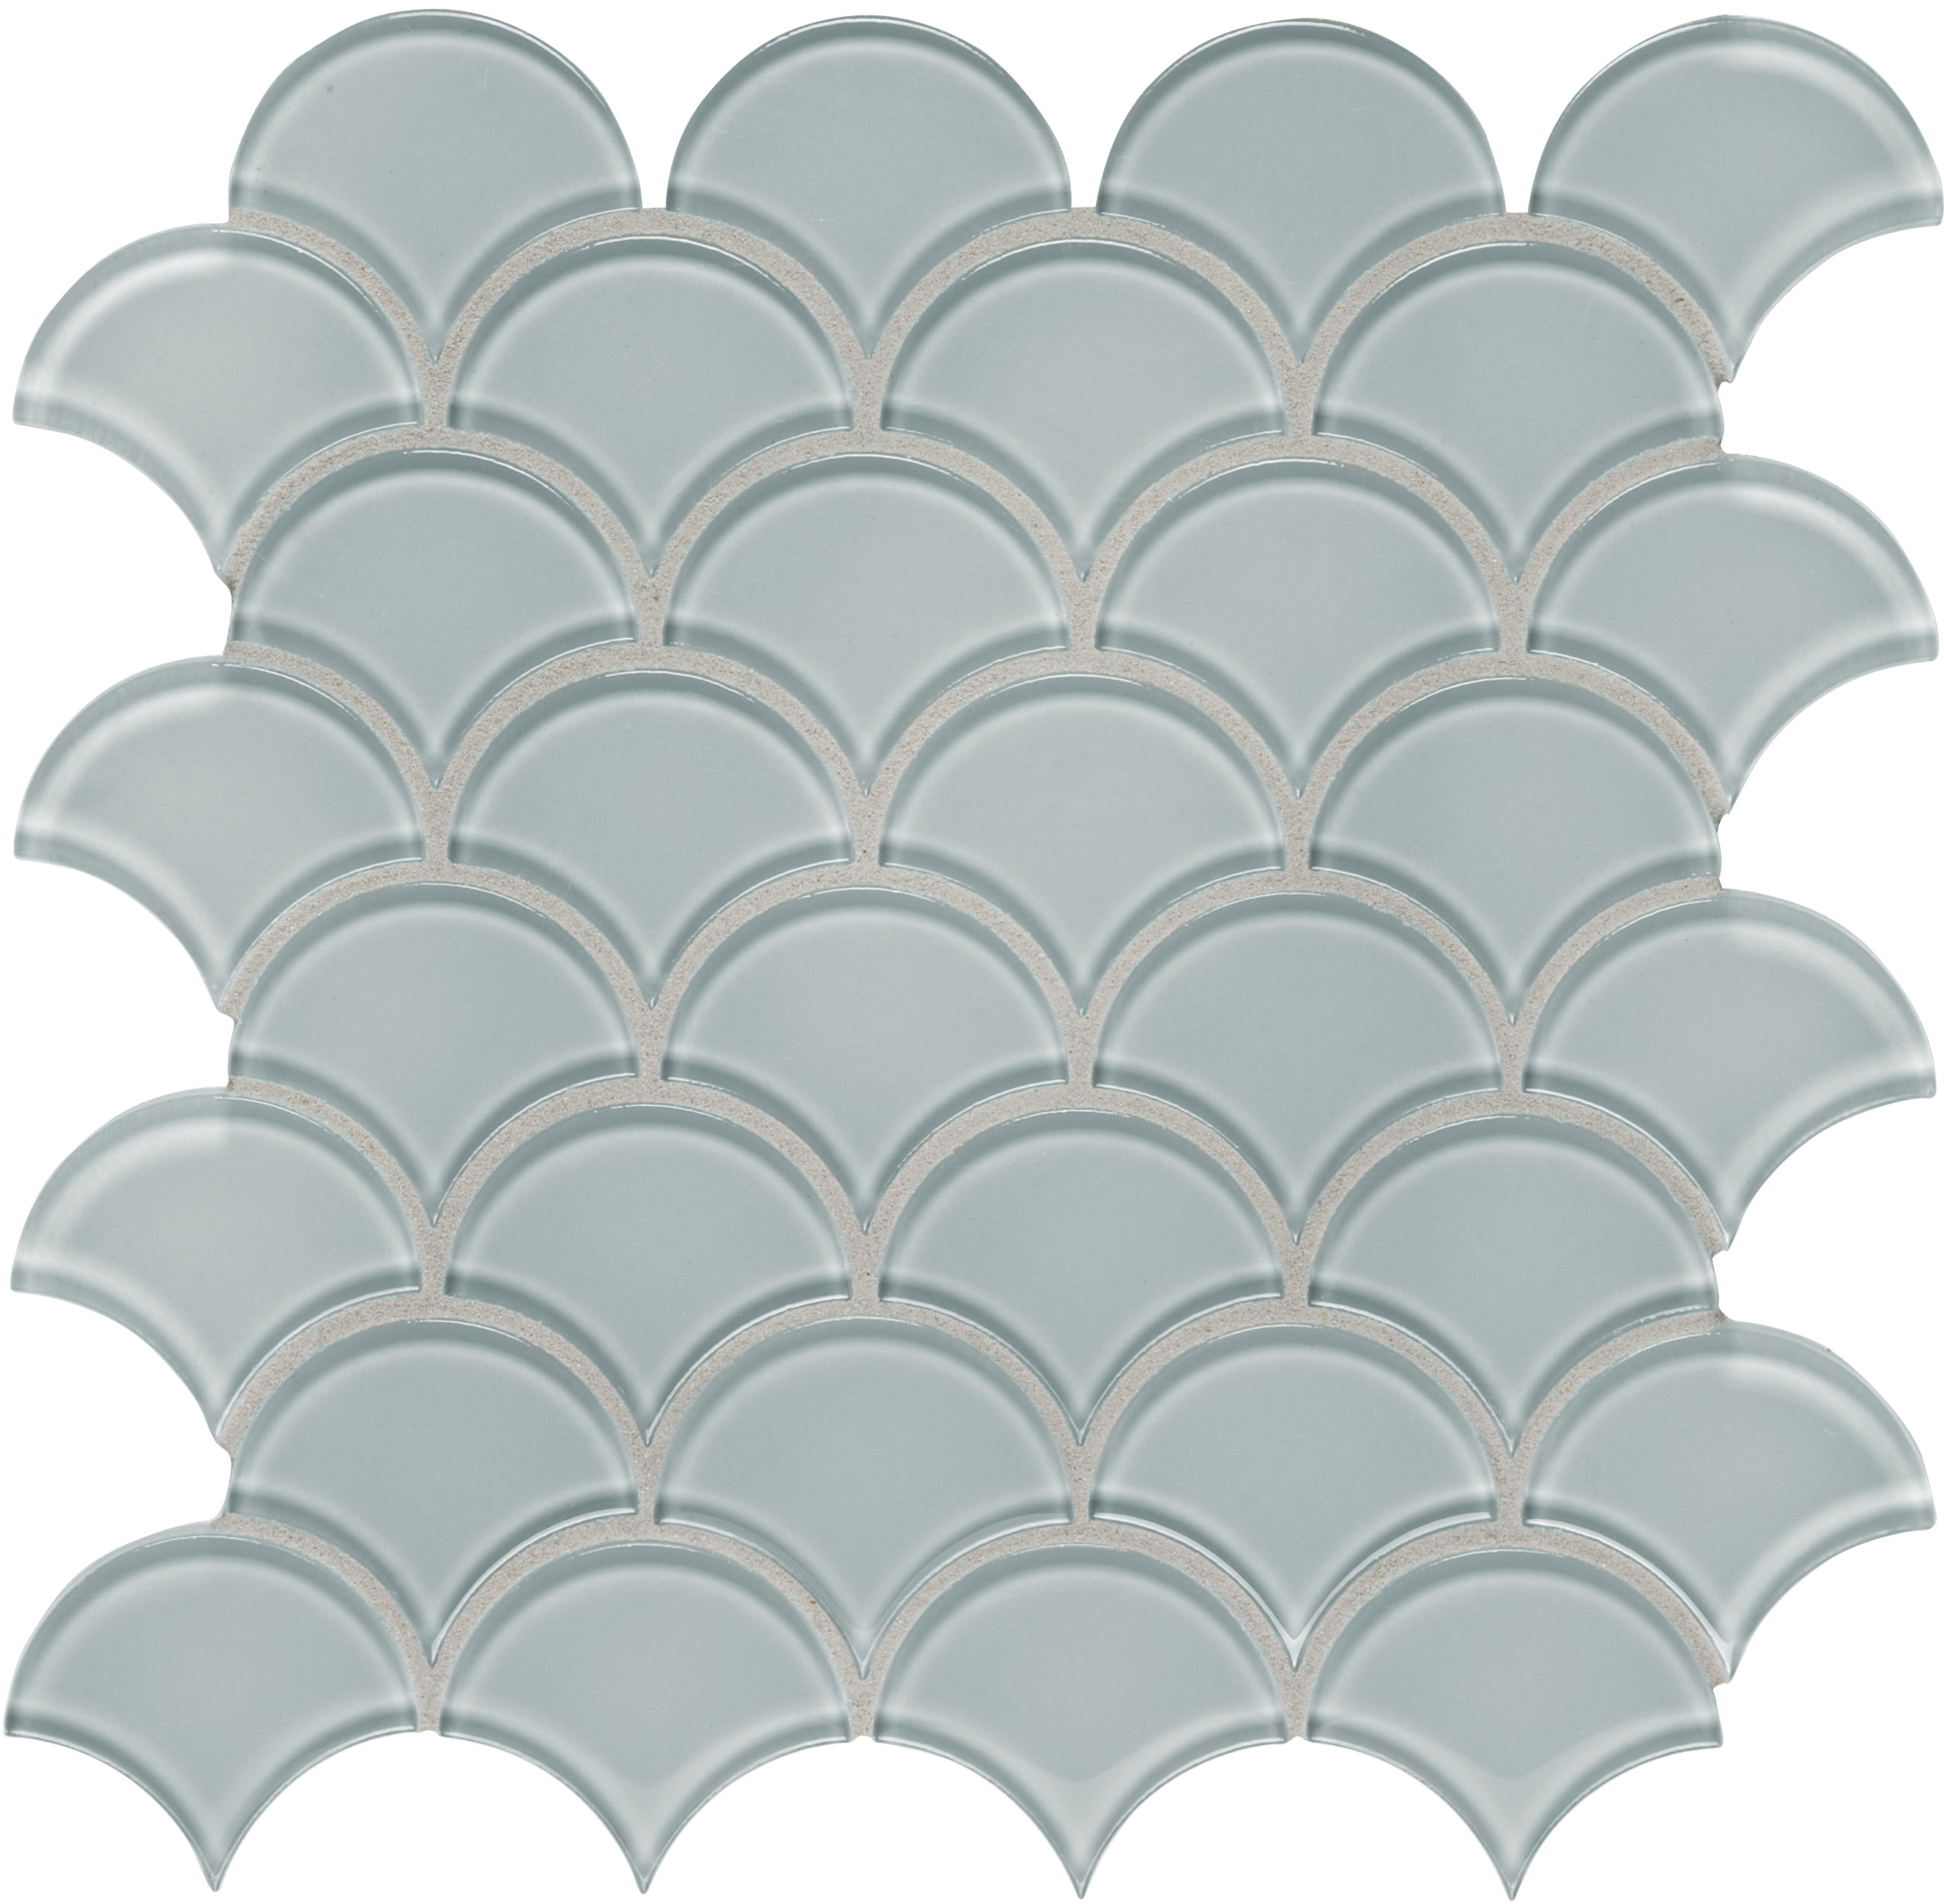 35 111 Element Cloud Glass Scallop Mosaics scaled